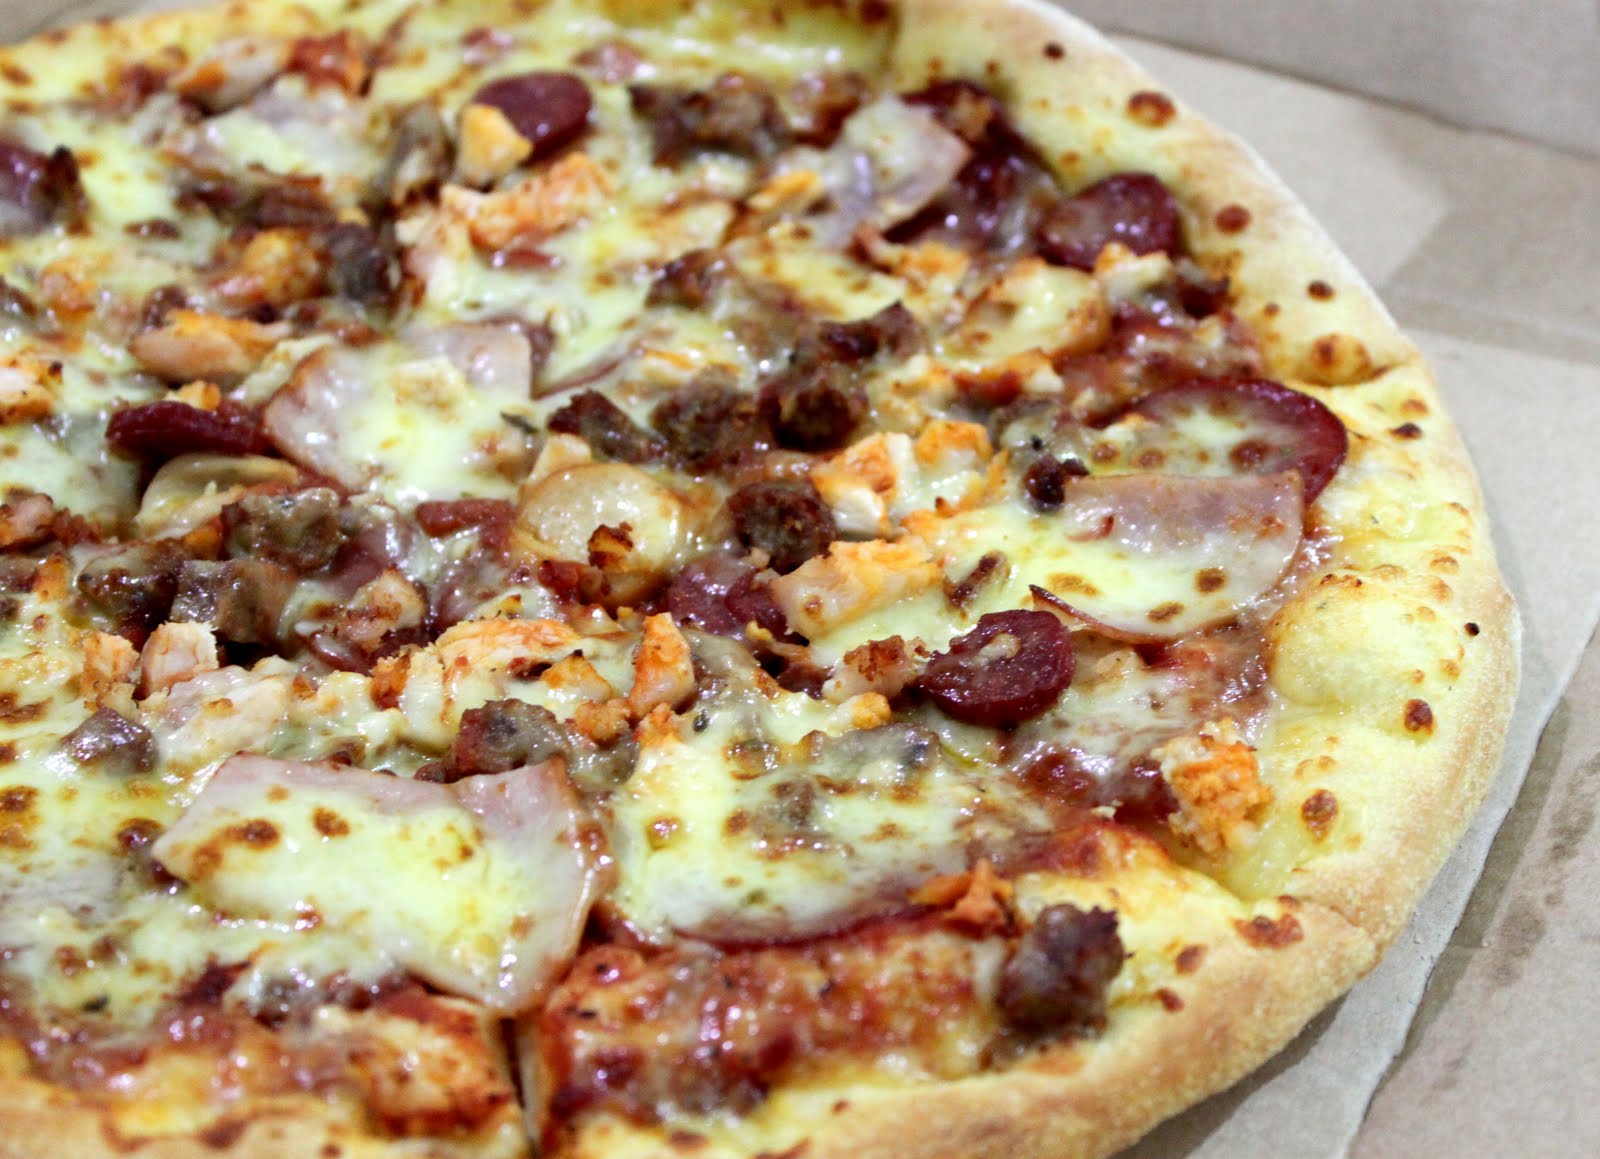 *the simplest aphrodisiac: Domino's Pizza